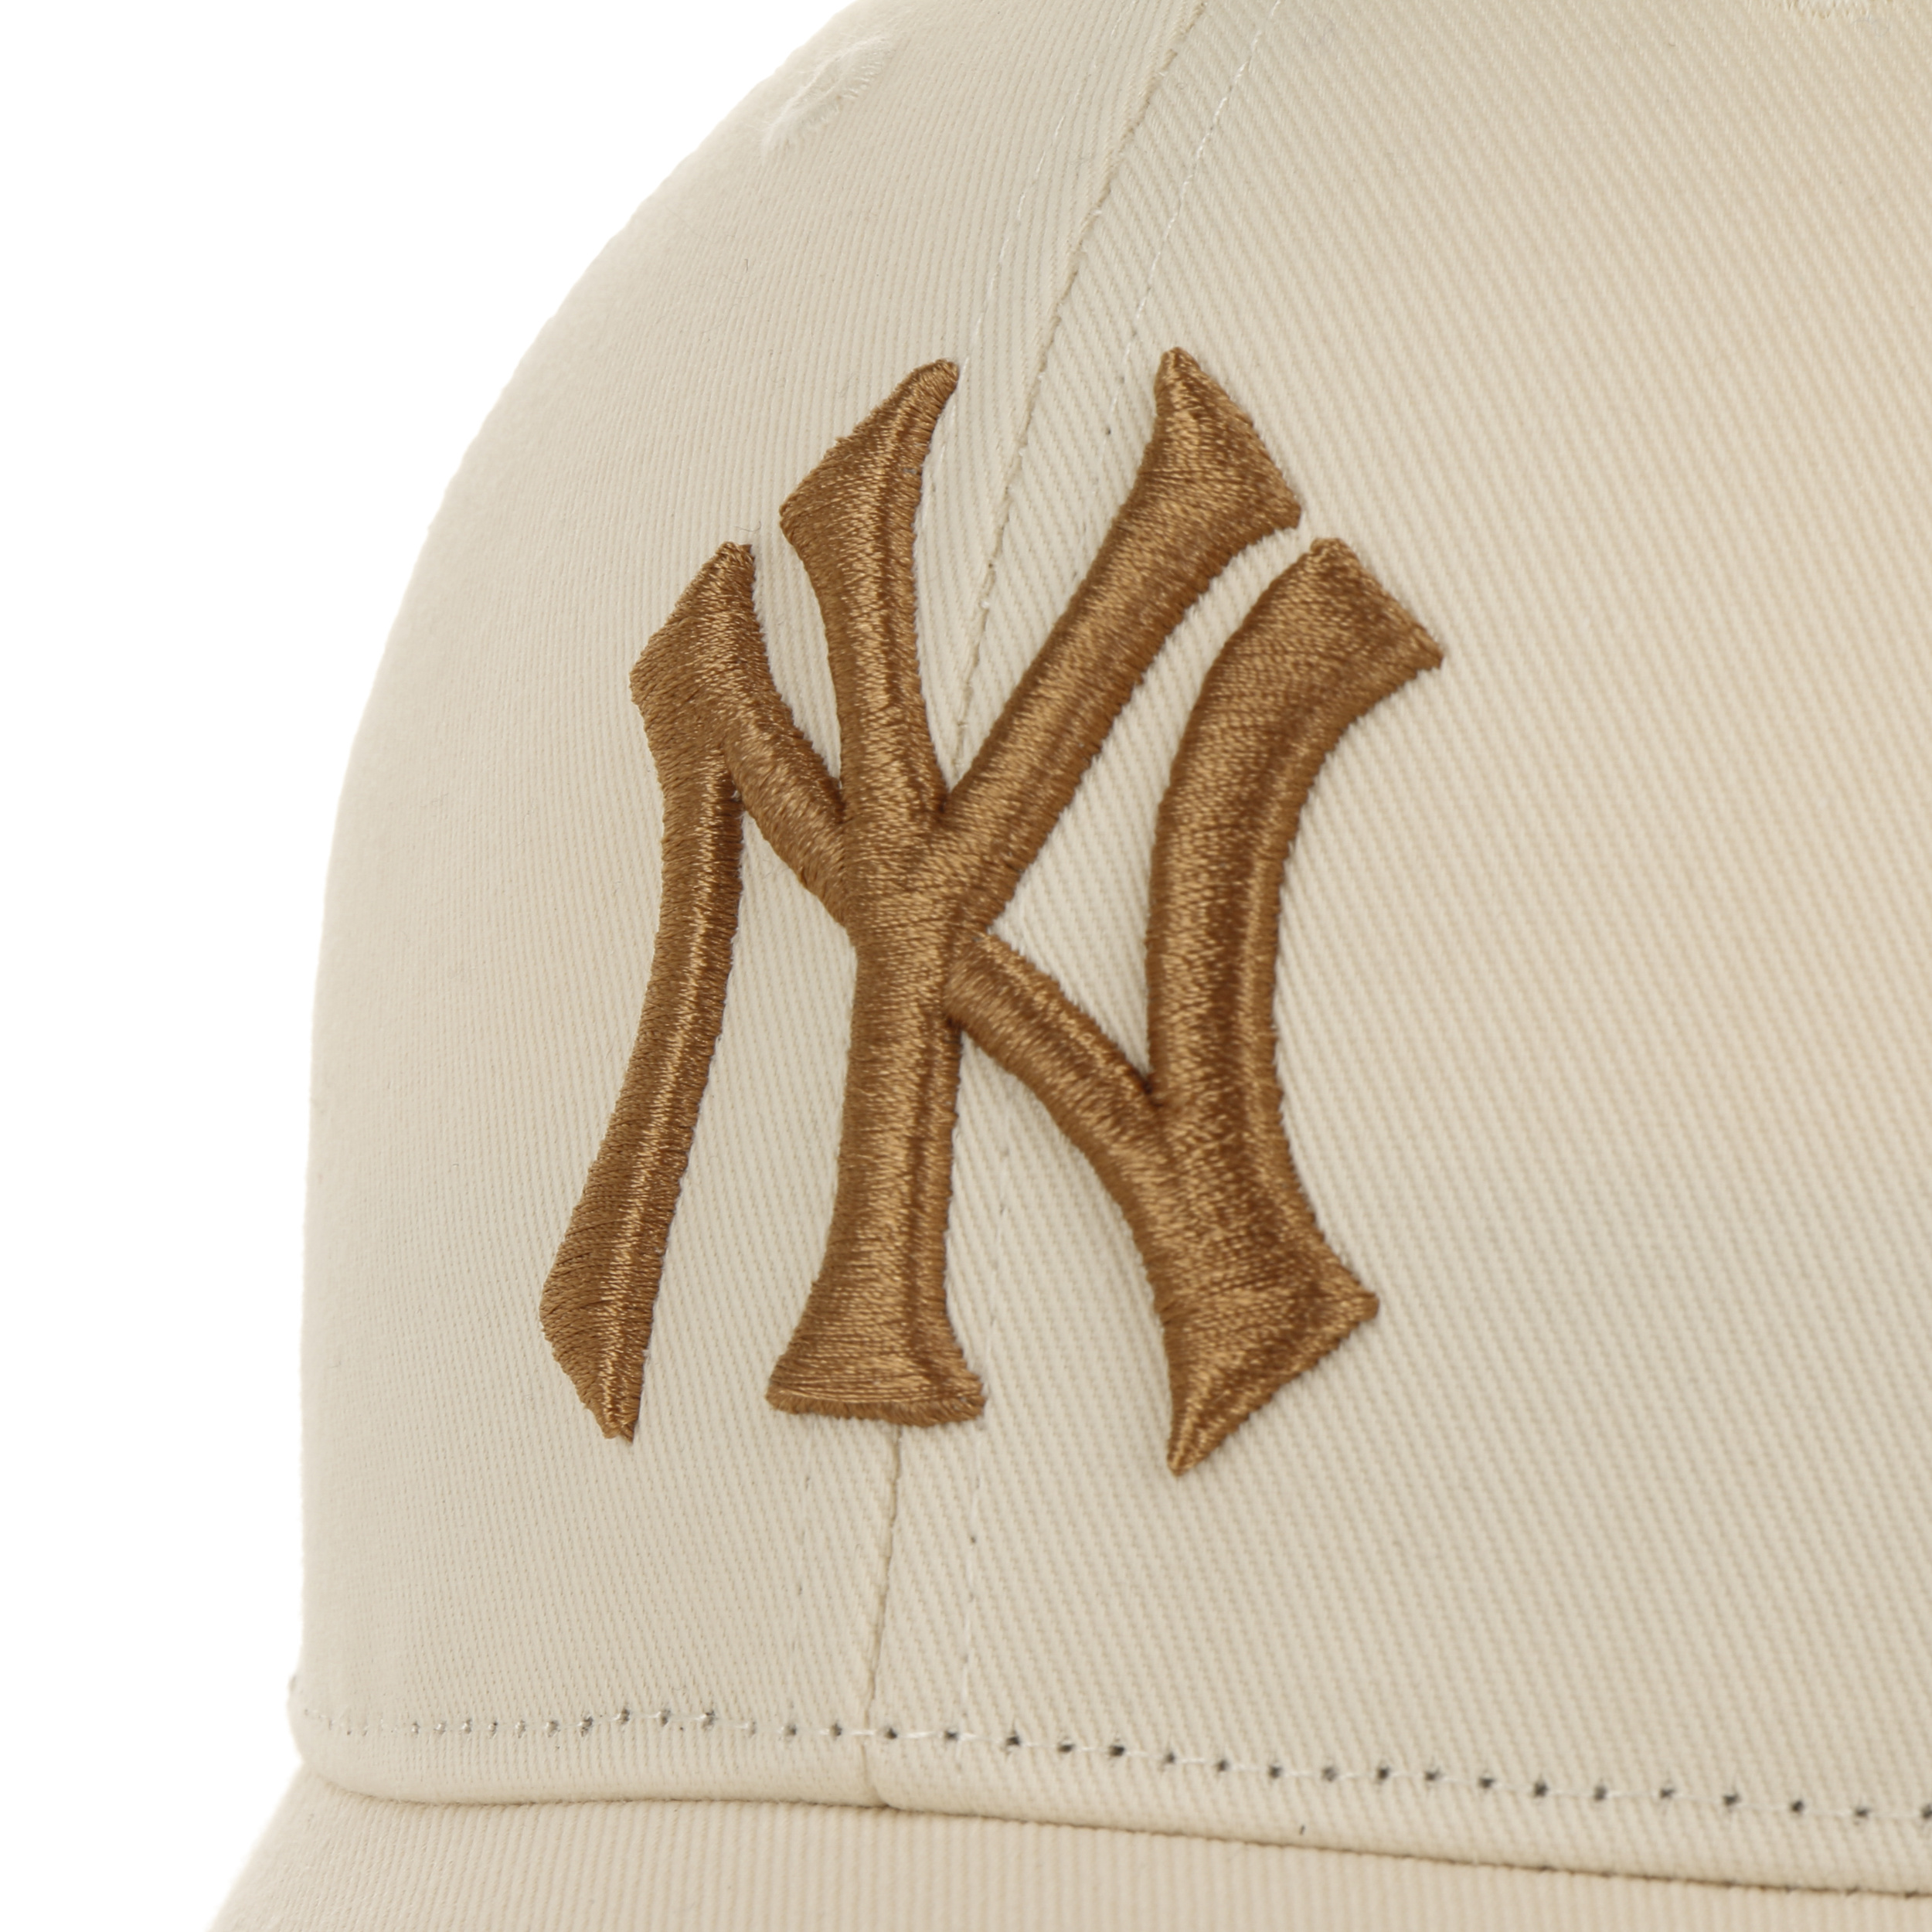 BRANSON New York Yankees khaki beige 47 Brand Trucker Cap 